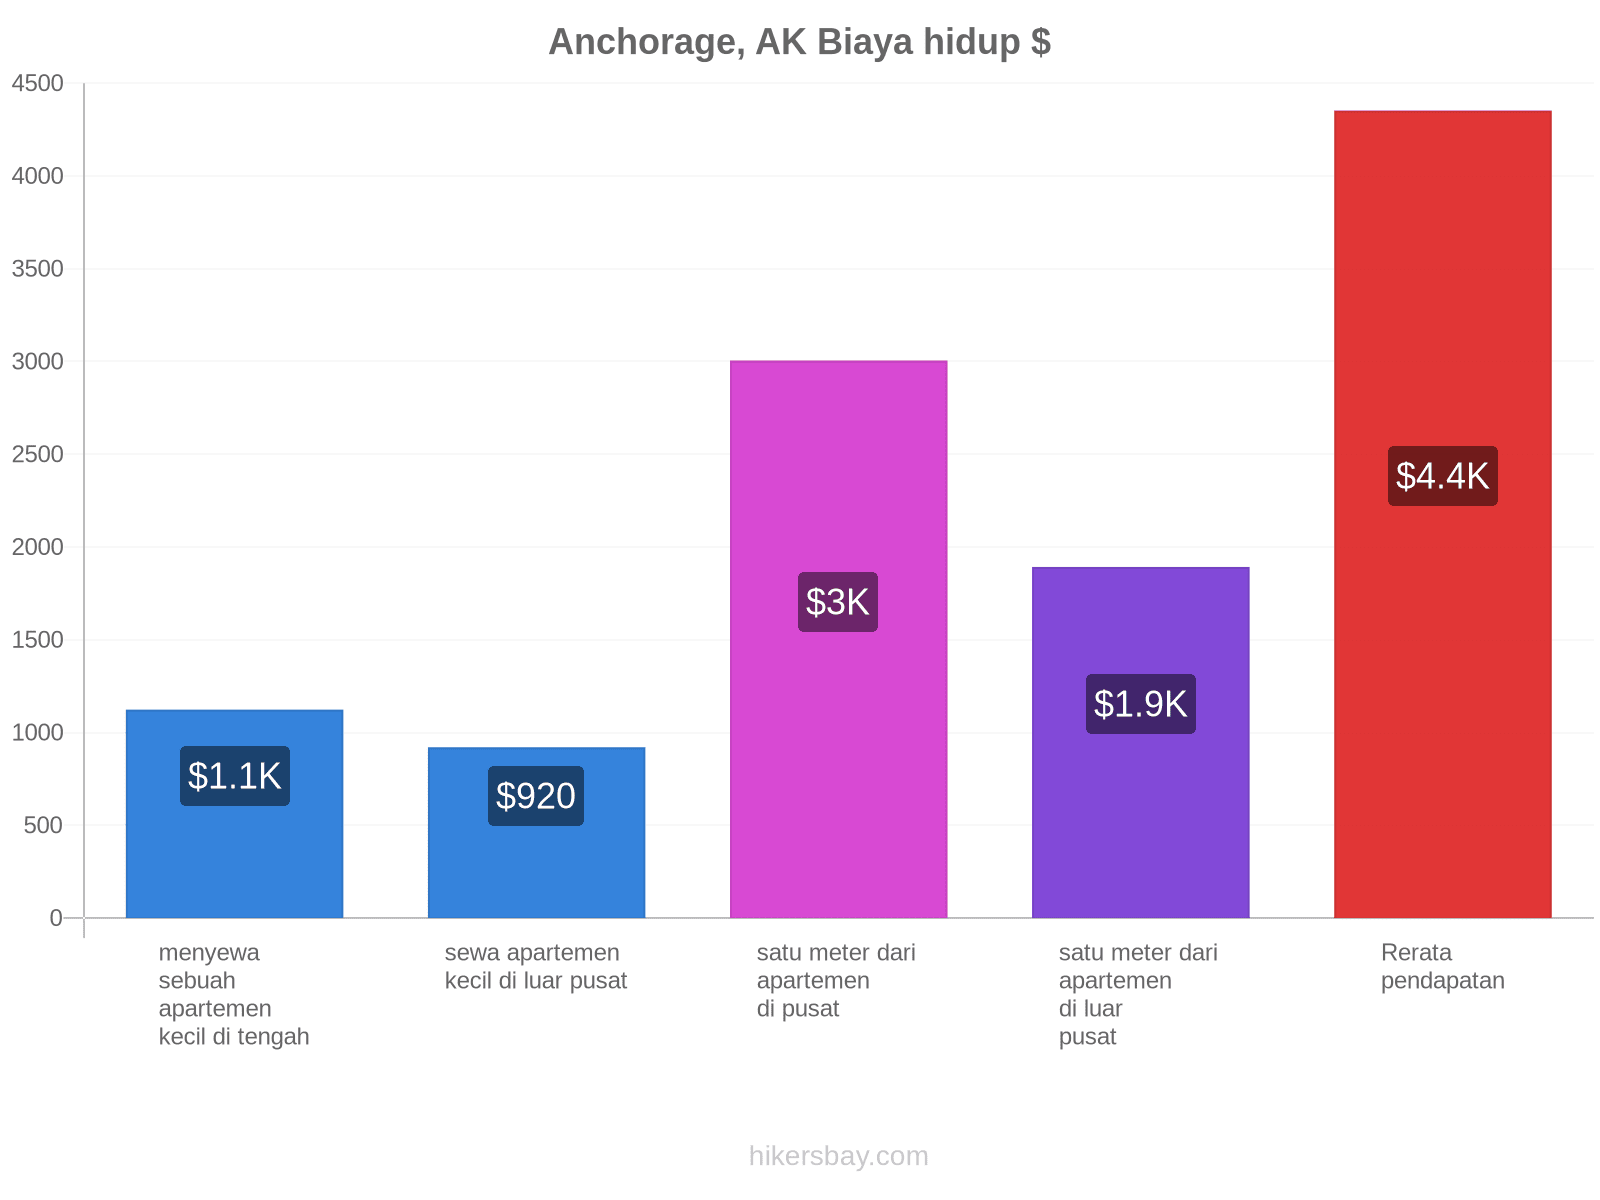 Anchorage, AK biaya hidup hikersbay.com